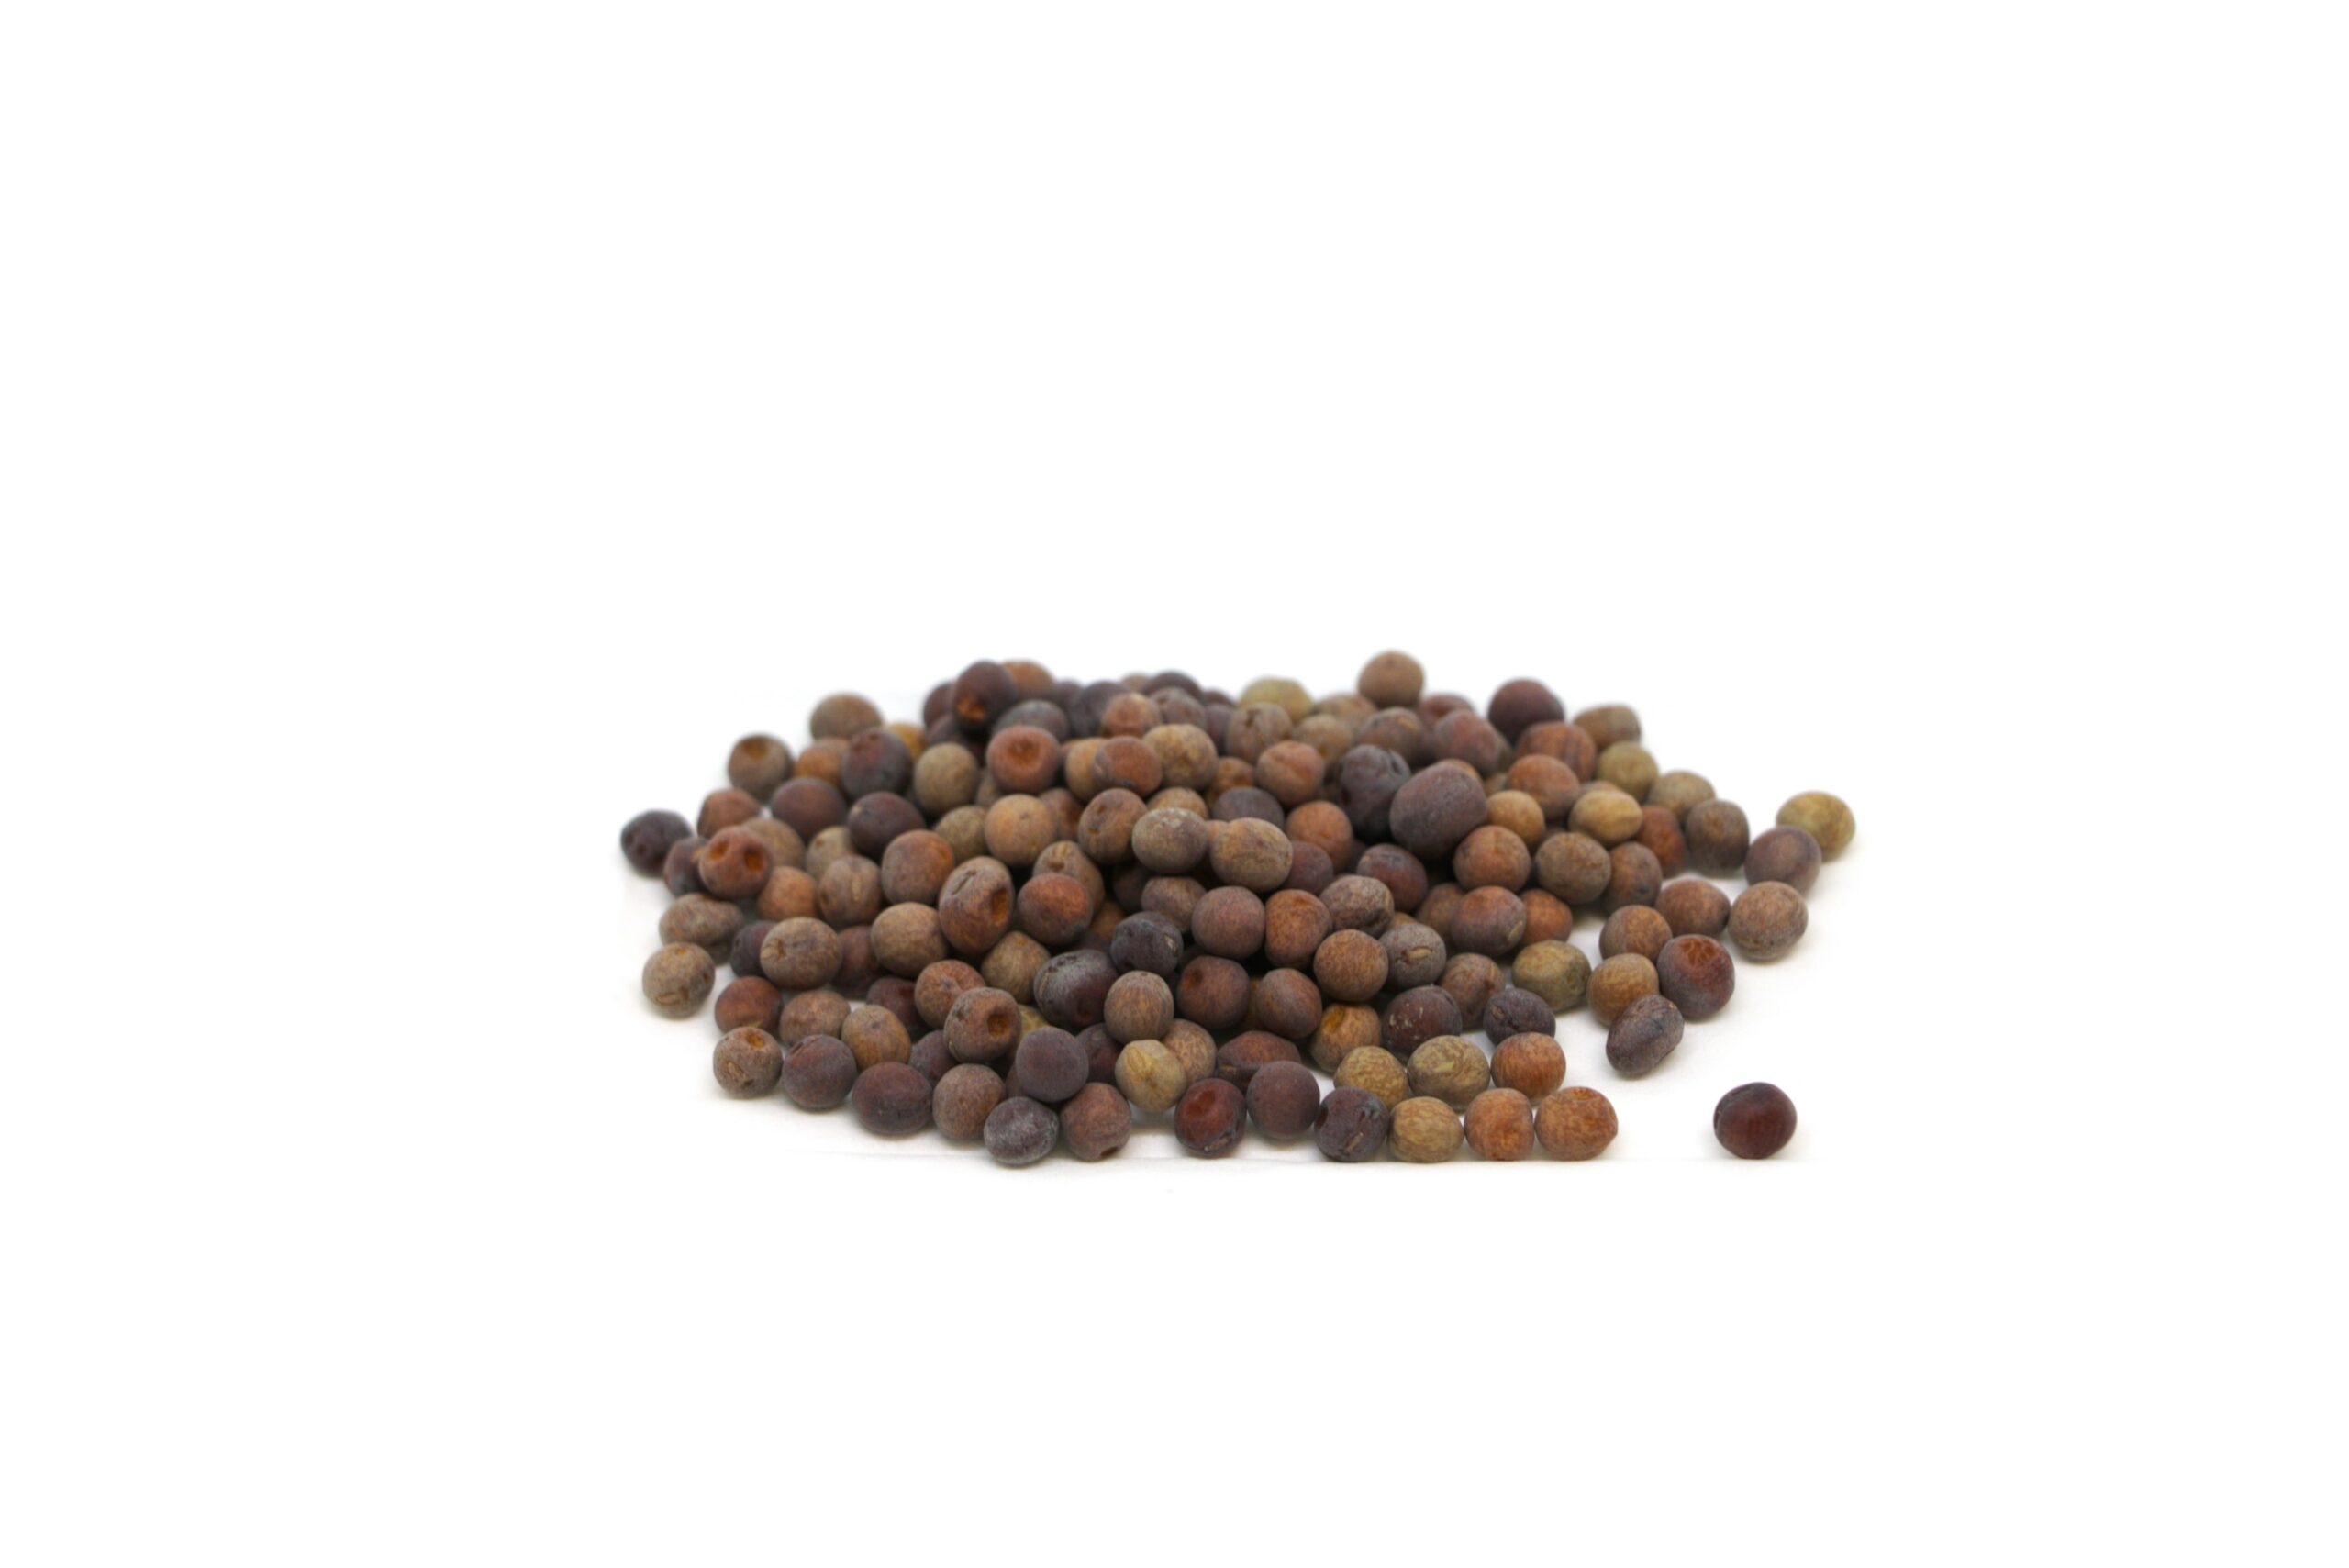 Organic brown peas seed